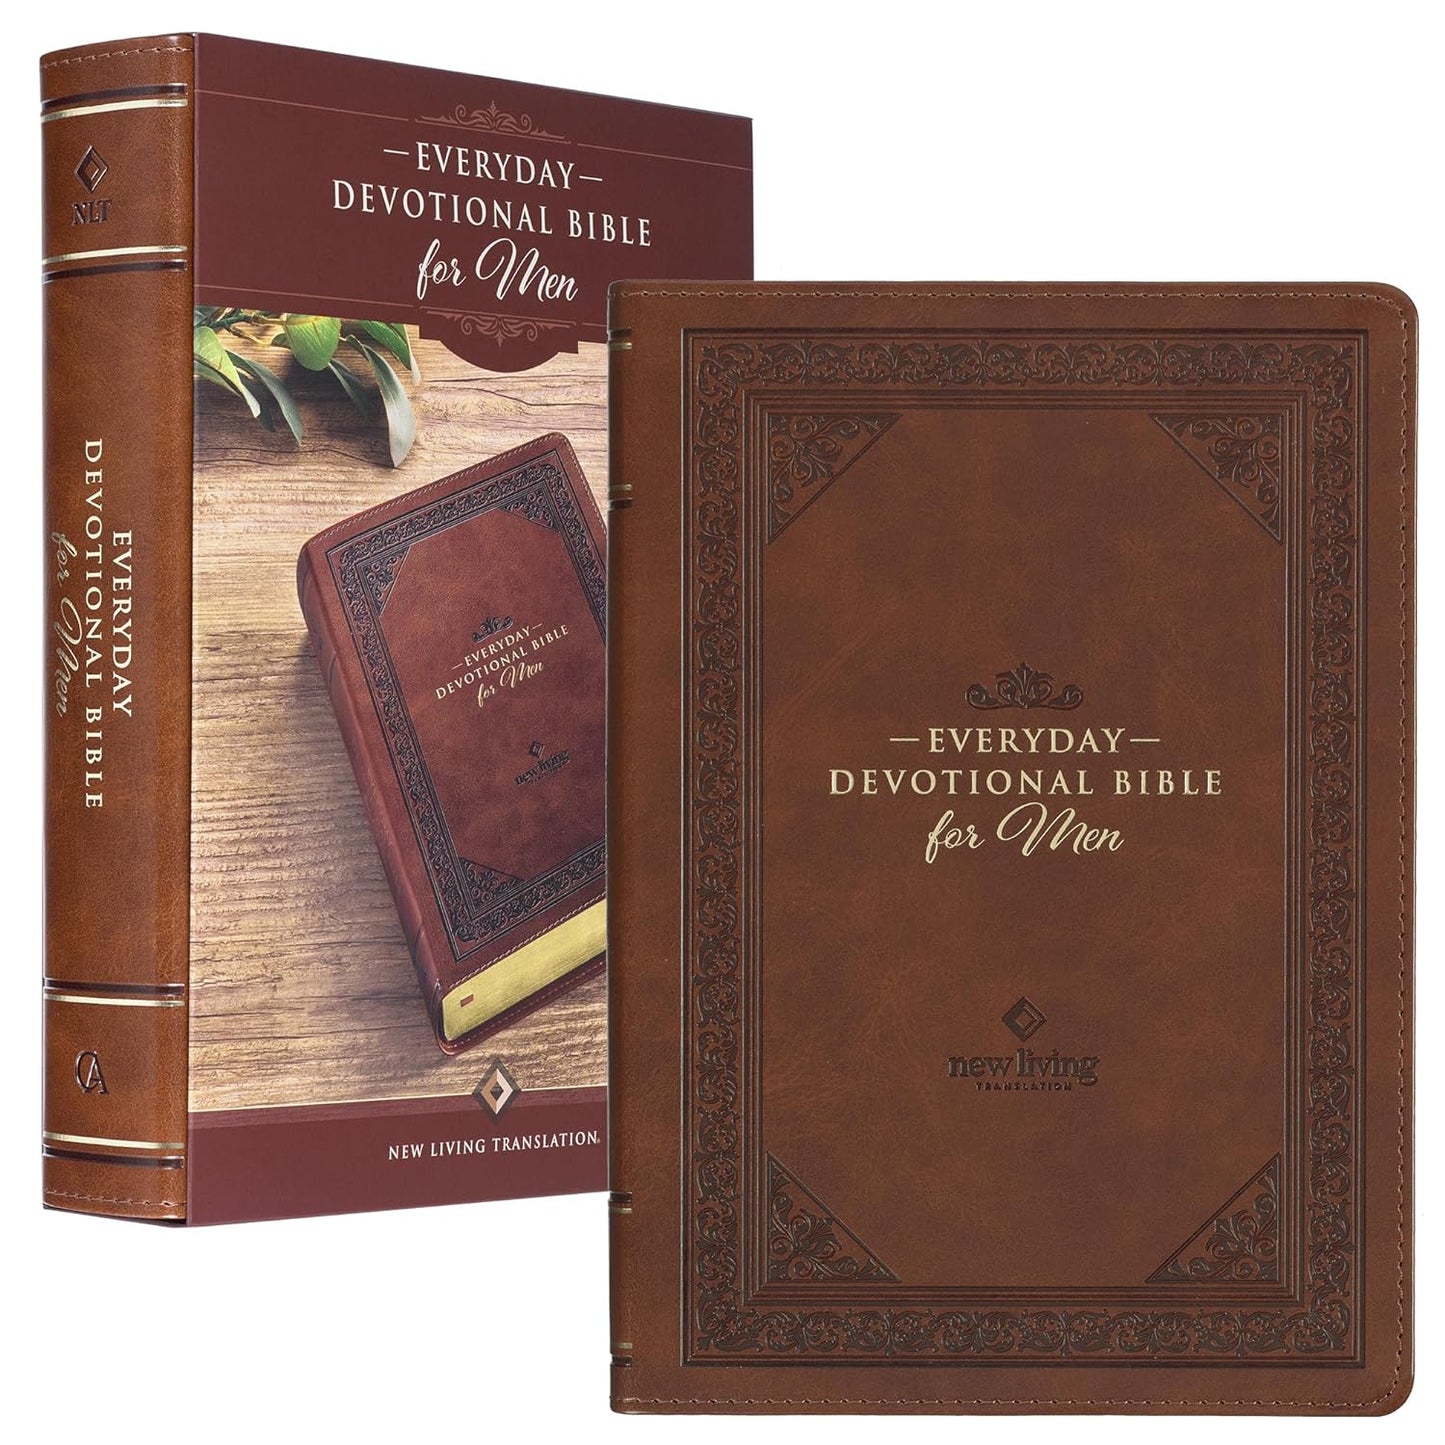 NLT Holy Bible Everyday Devotional Bible for Men - Vegan Leather